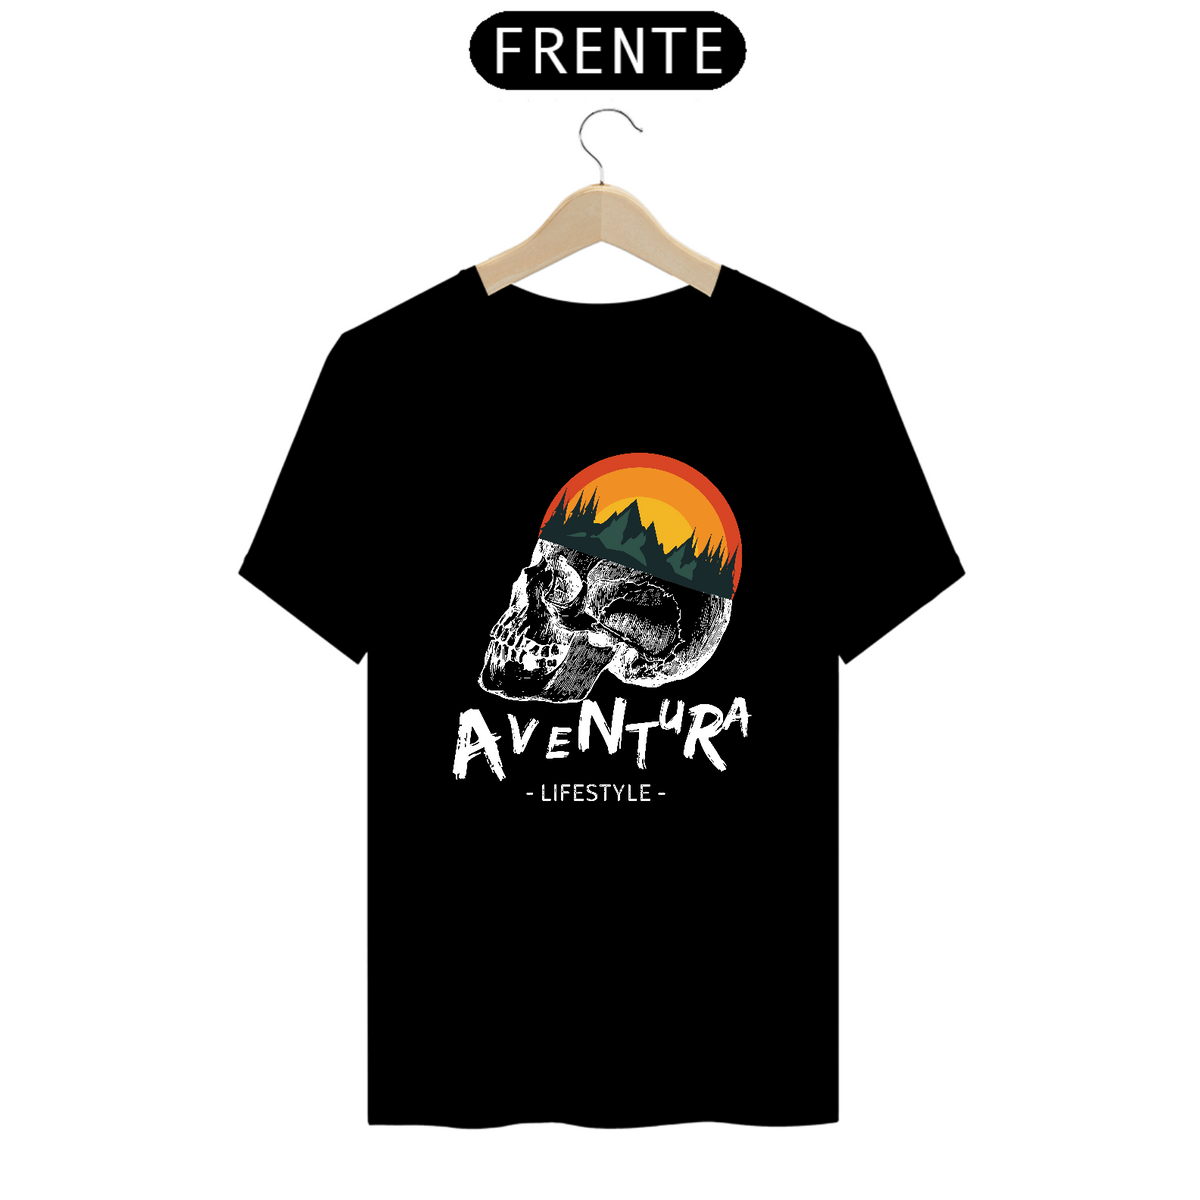 Nome do produto: T- shirt caveira aventura lifestile